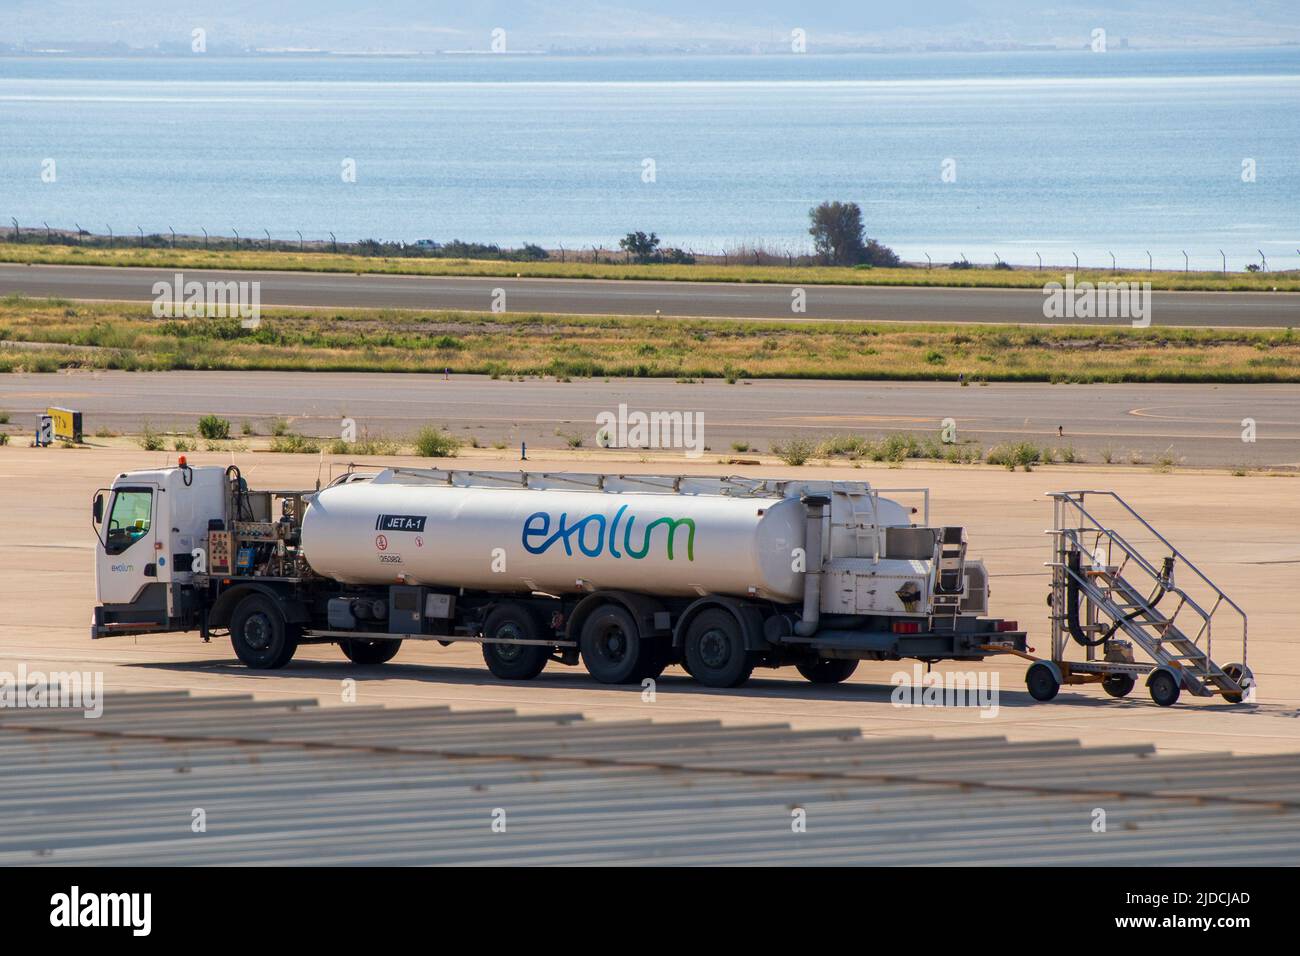 Exolum Refueling Tanker at Almeria Airport Stock Photo